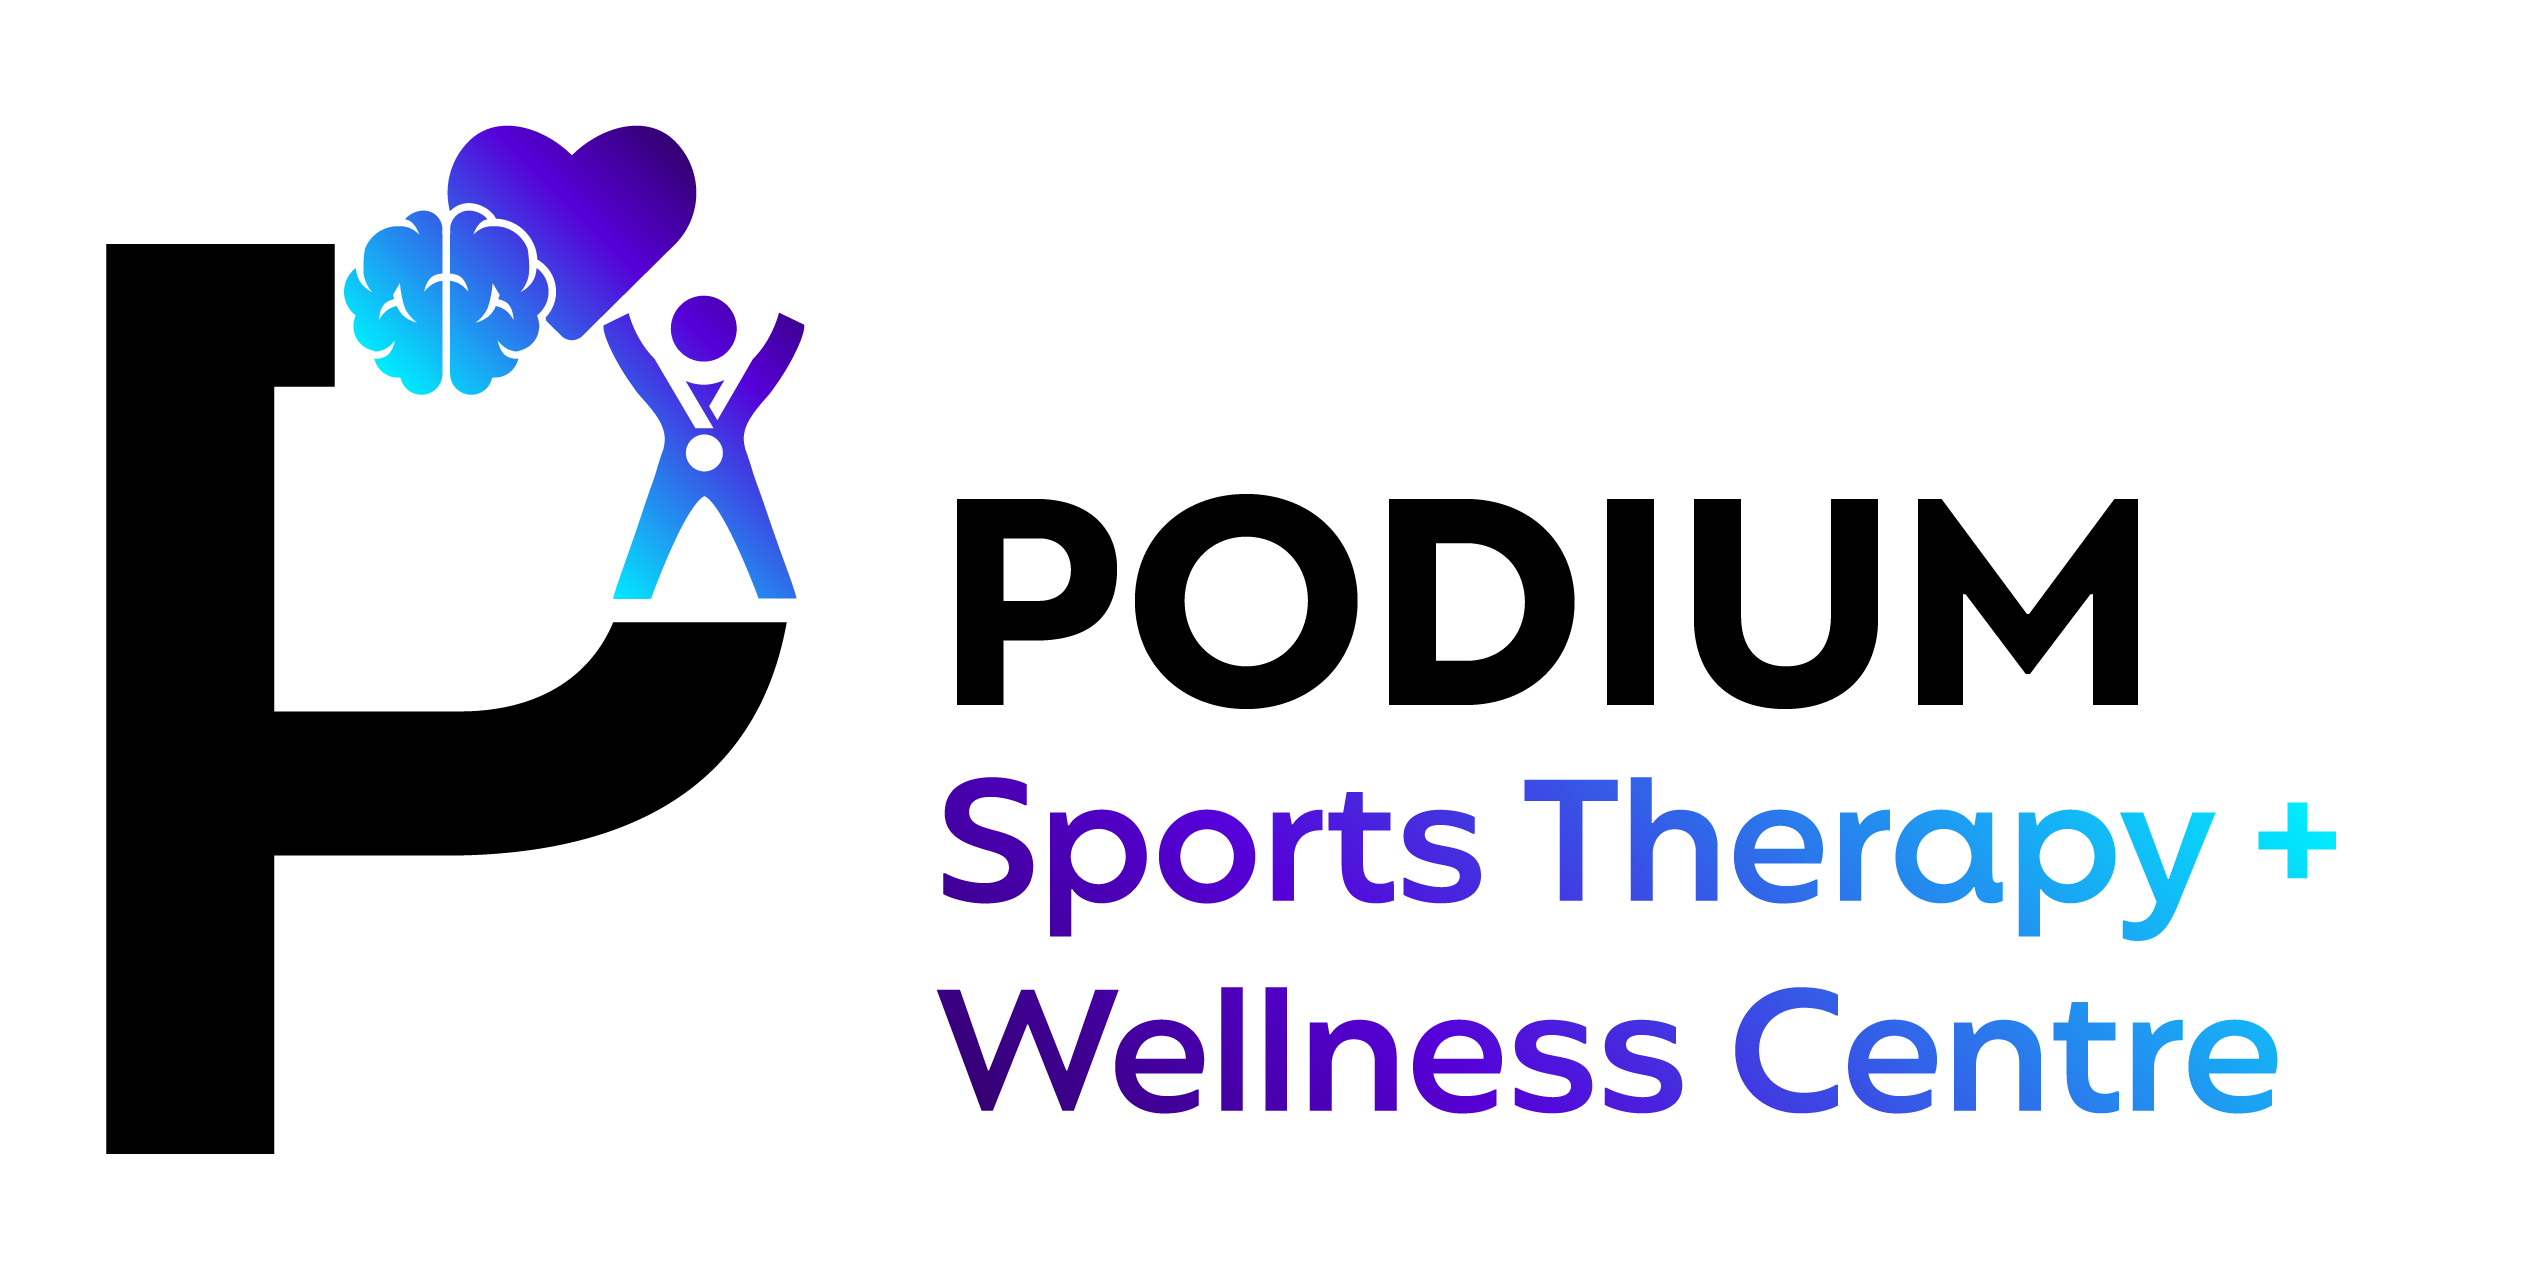 Podium Sports Therapy & Wellness Centre